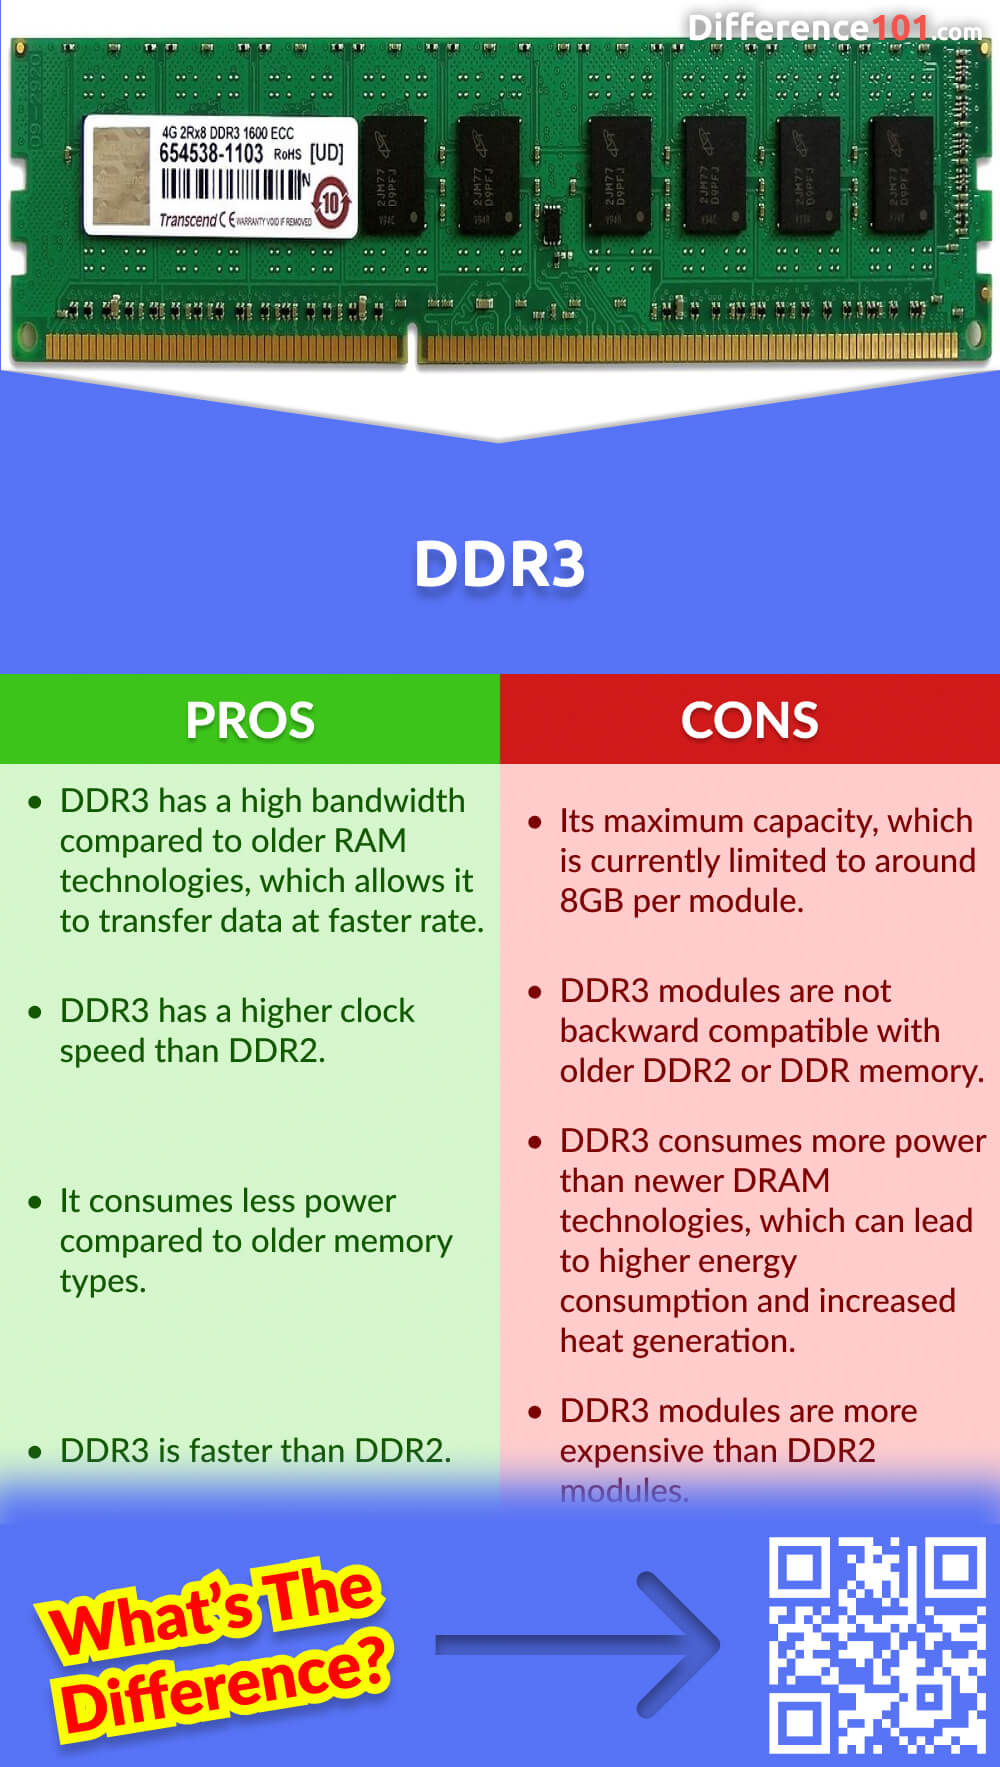 DDR3 Pros & Cons